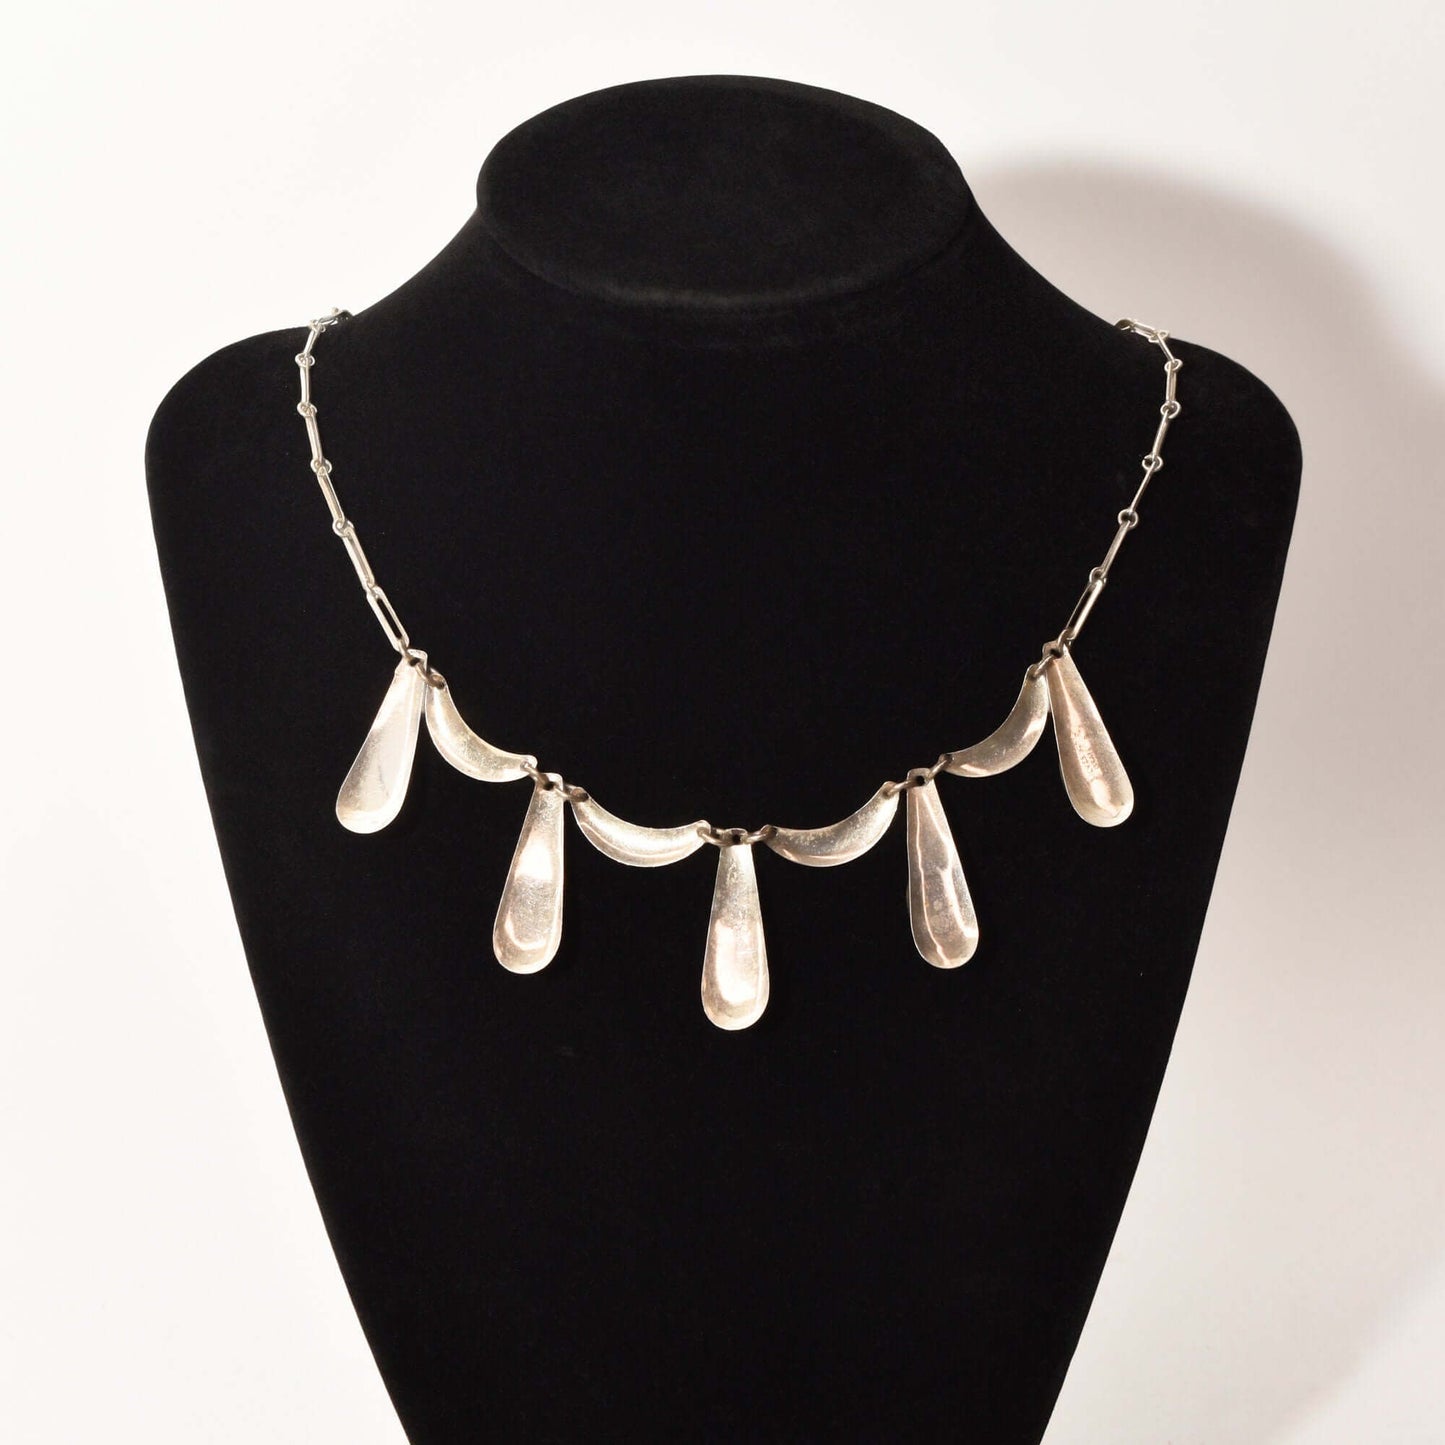 Israeli Sterling Silver Turquoise Festoon Necklace, Piano Key Pendant, Gemstone Jewelry, 19" L